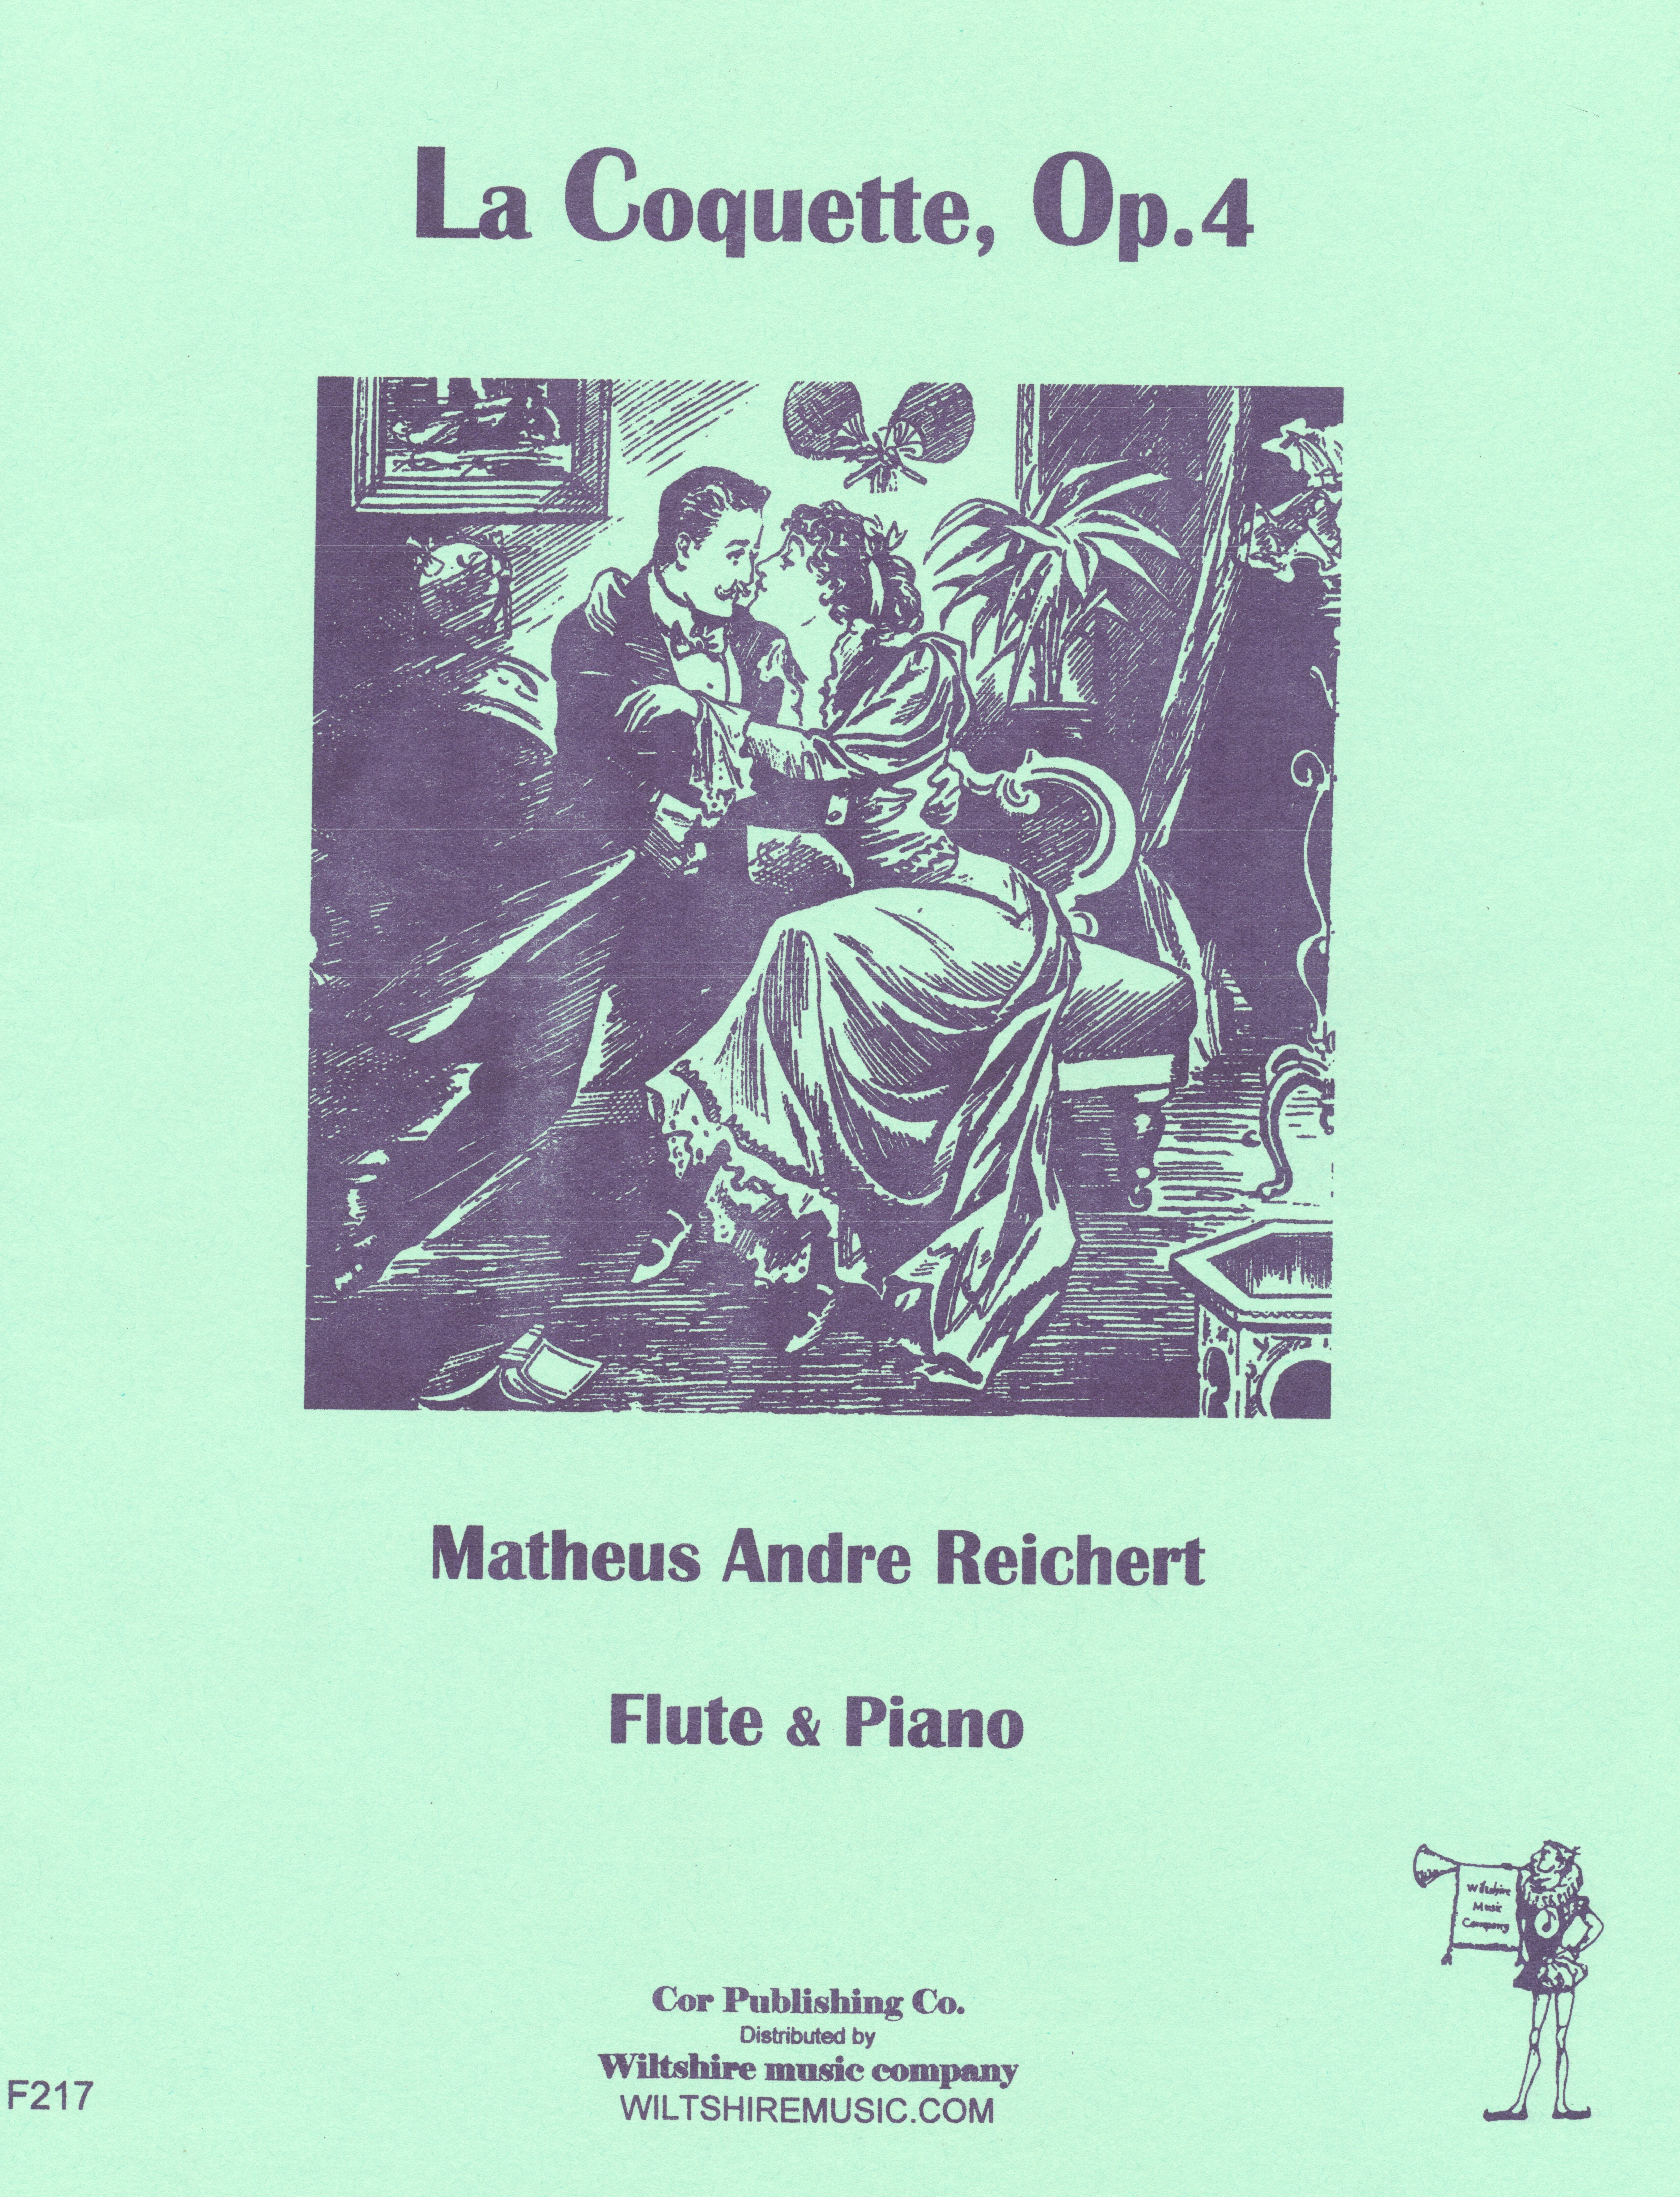 La Coquette, Op.4, M. A. Richert, flute & piano